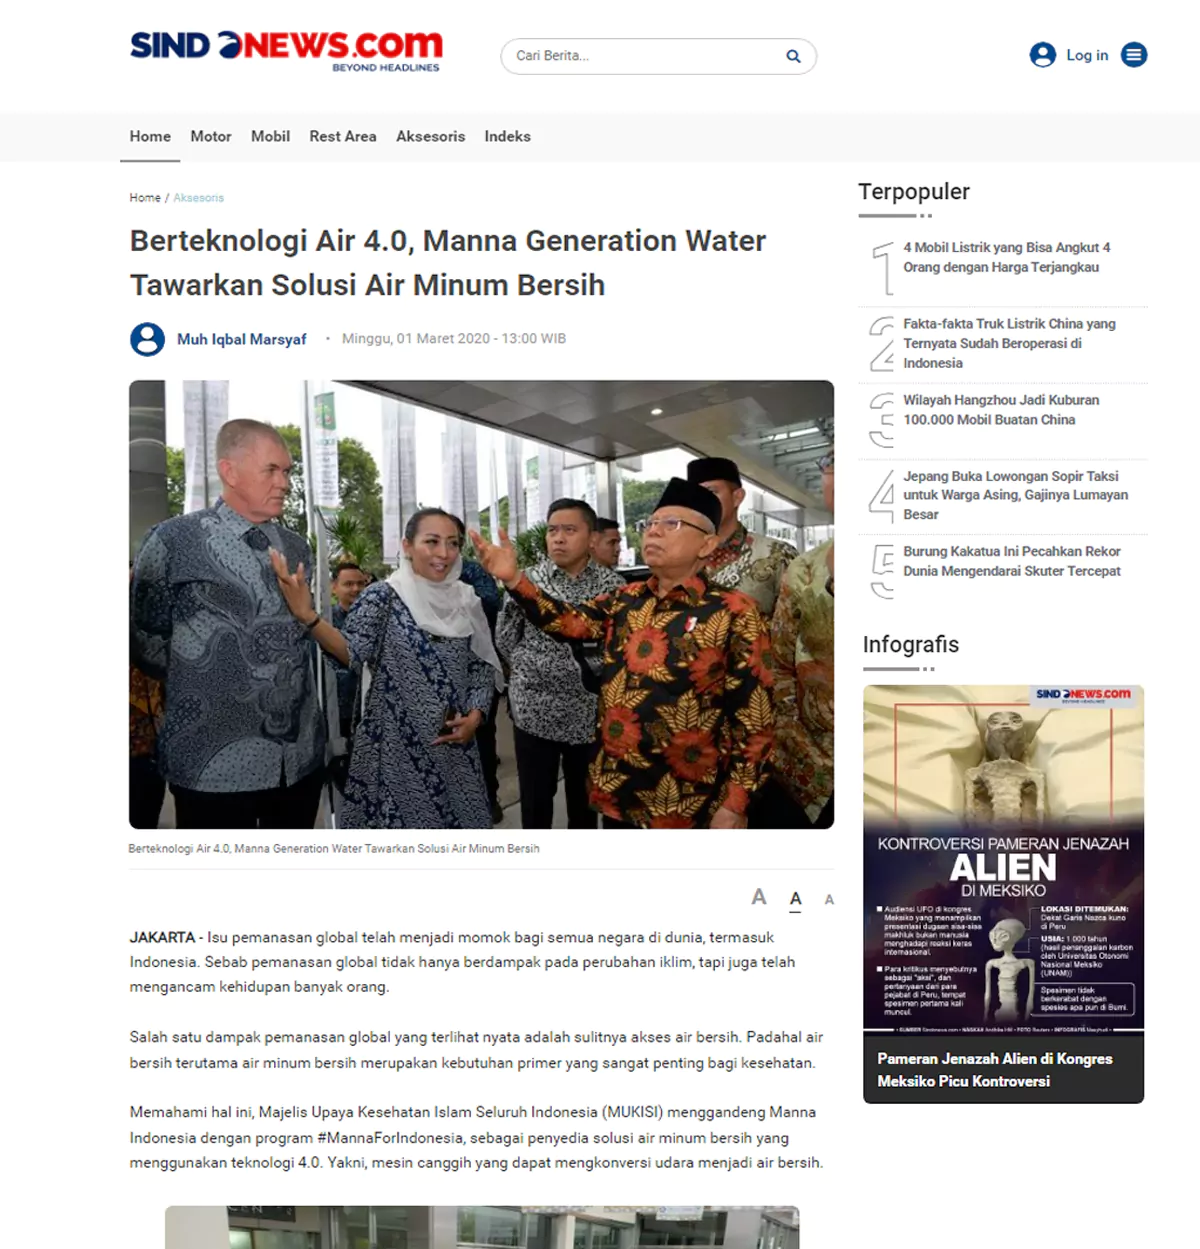 sindo news, berteknologi air 4,0 Manna Generation Water